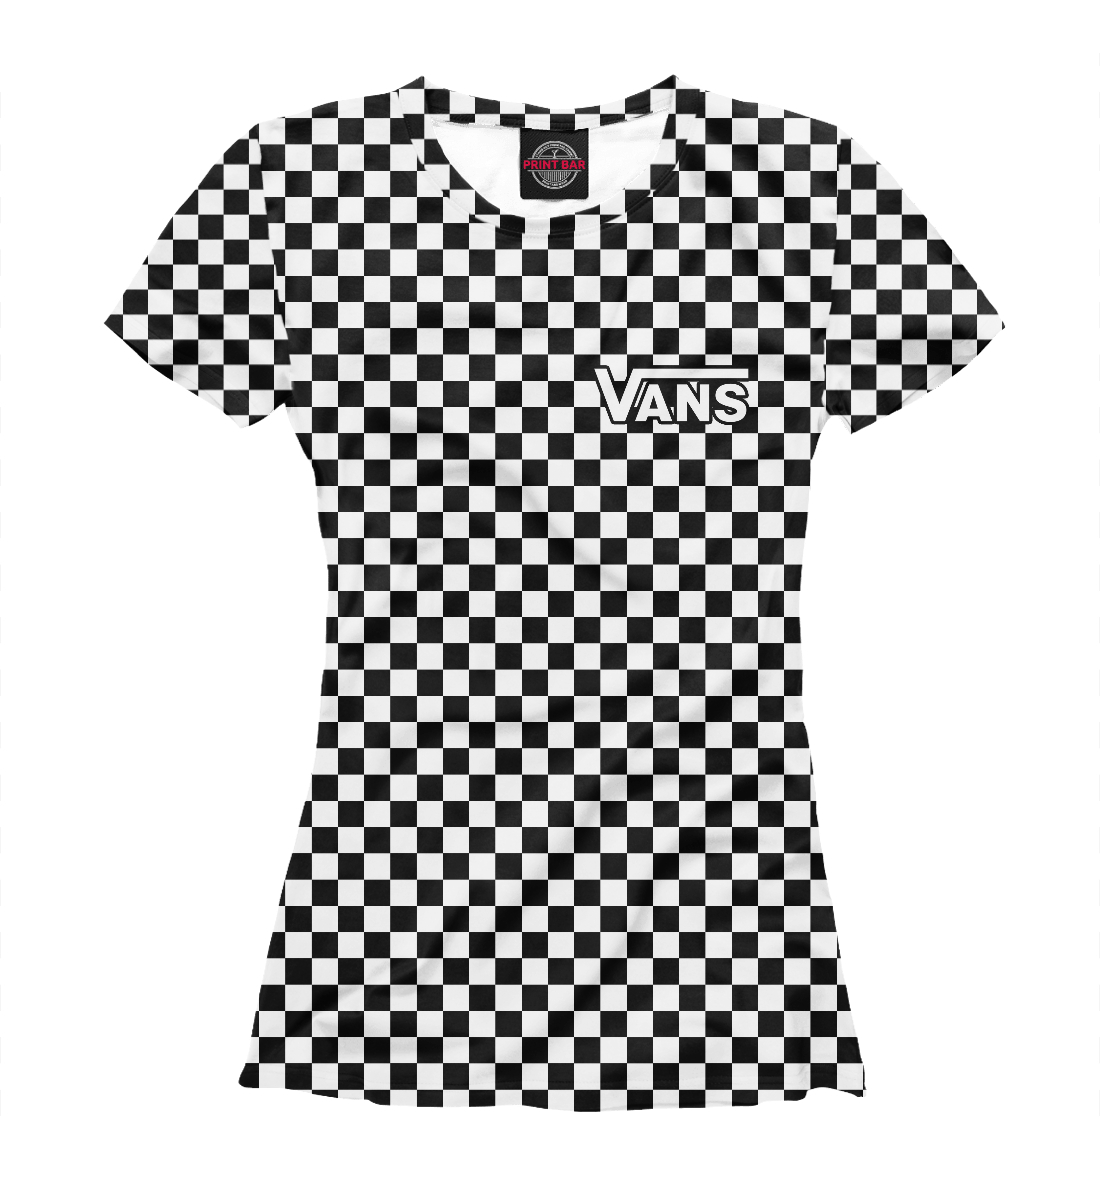 Футболка Vans Classic для девочек, артикул: VAN-153033-fut-1mp